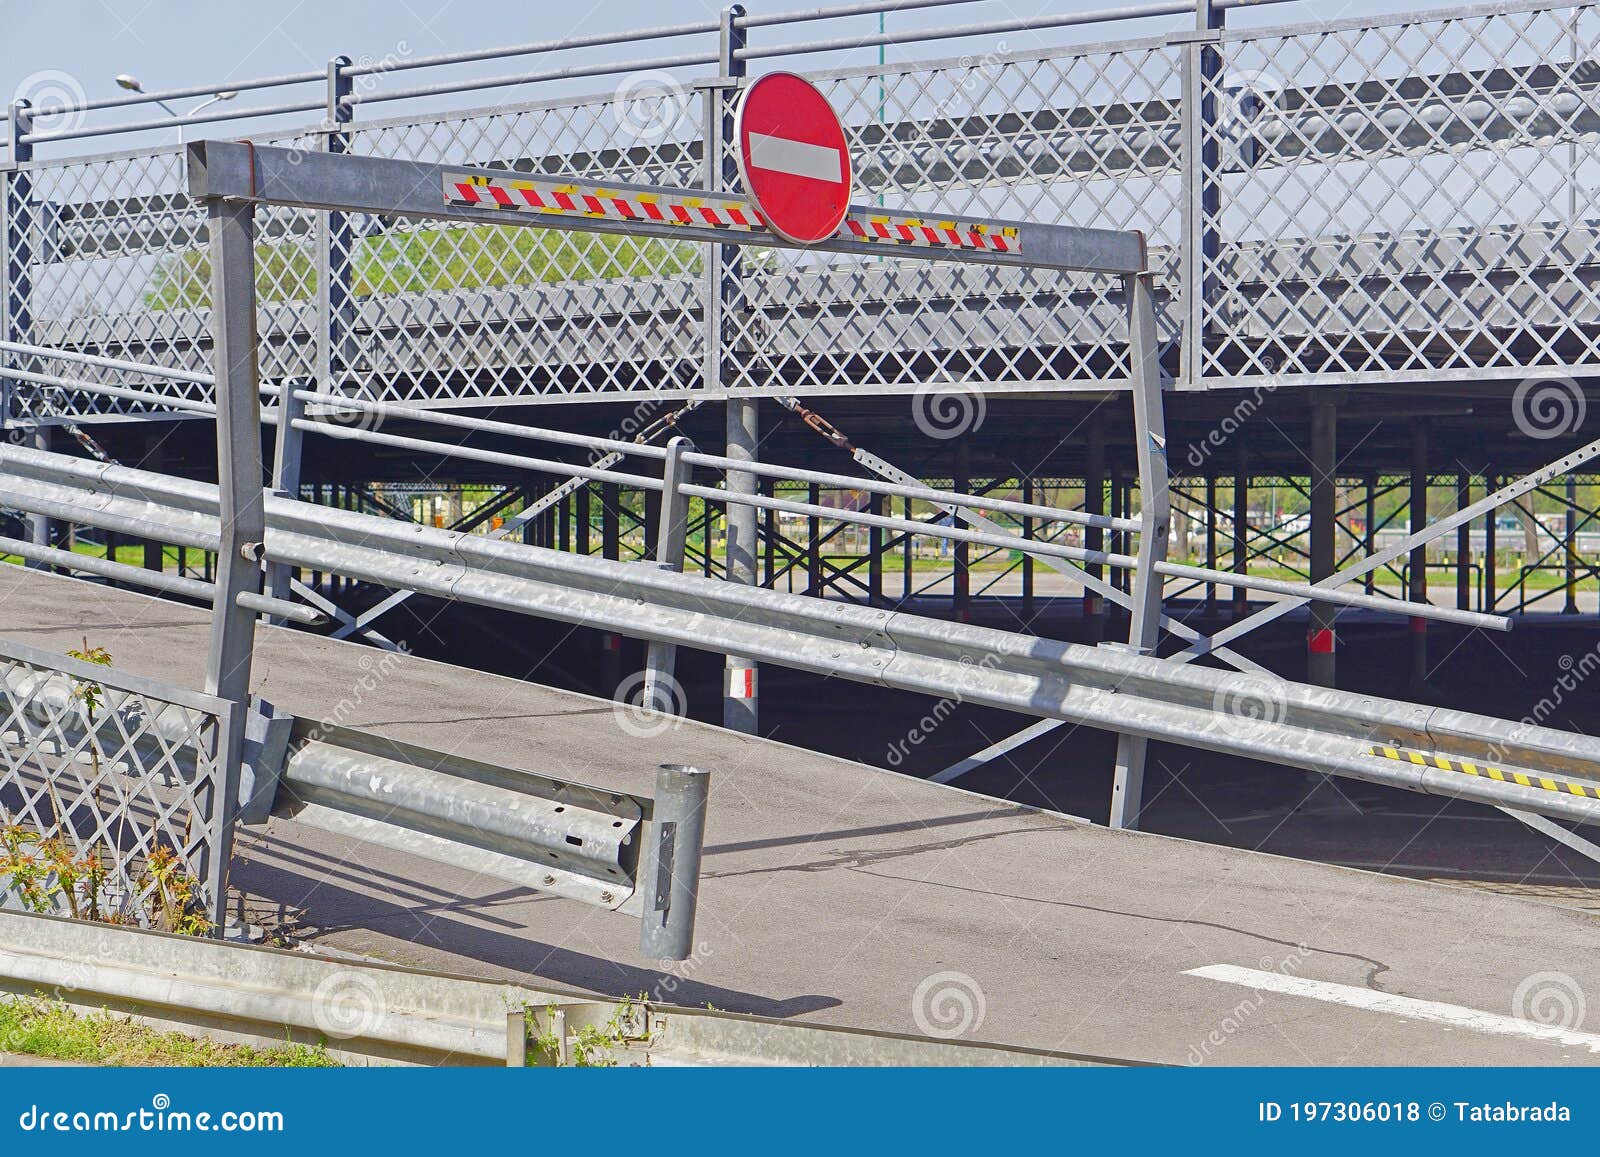 No entry ramp stock photo. Image of fence, level, entry - 197306018